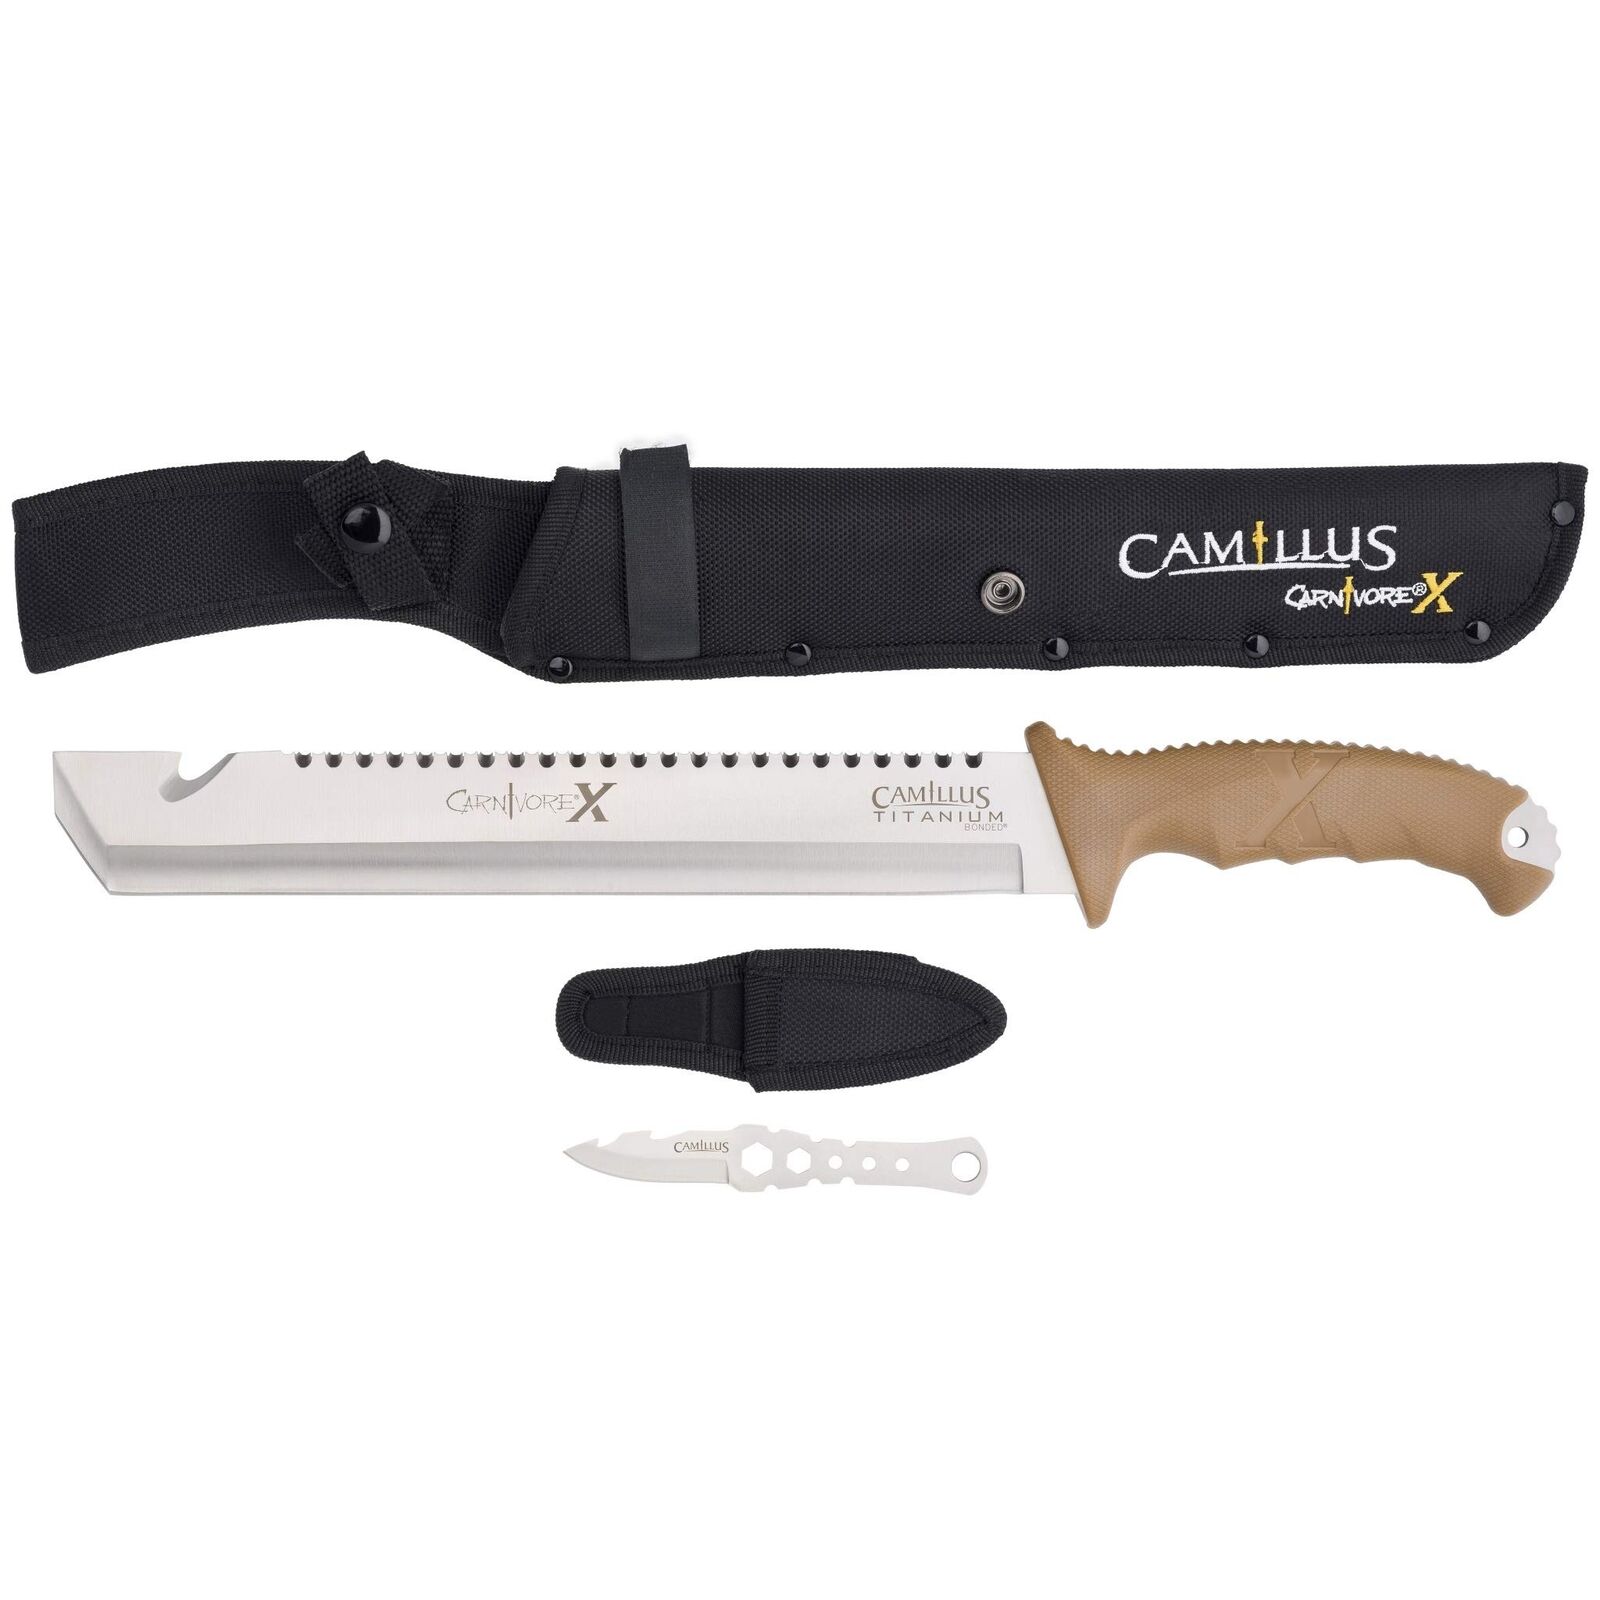 Camillus Carnivore X 18-Inch Machete with Sheath and Multitool Knife, Titaniu...